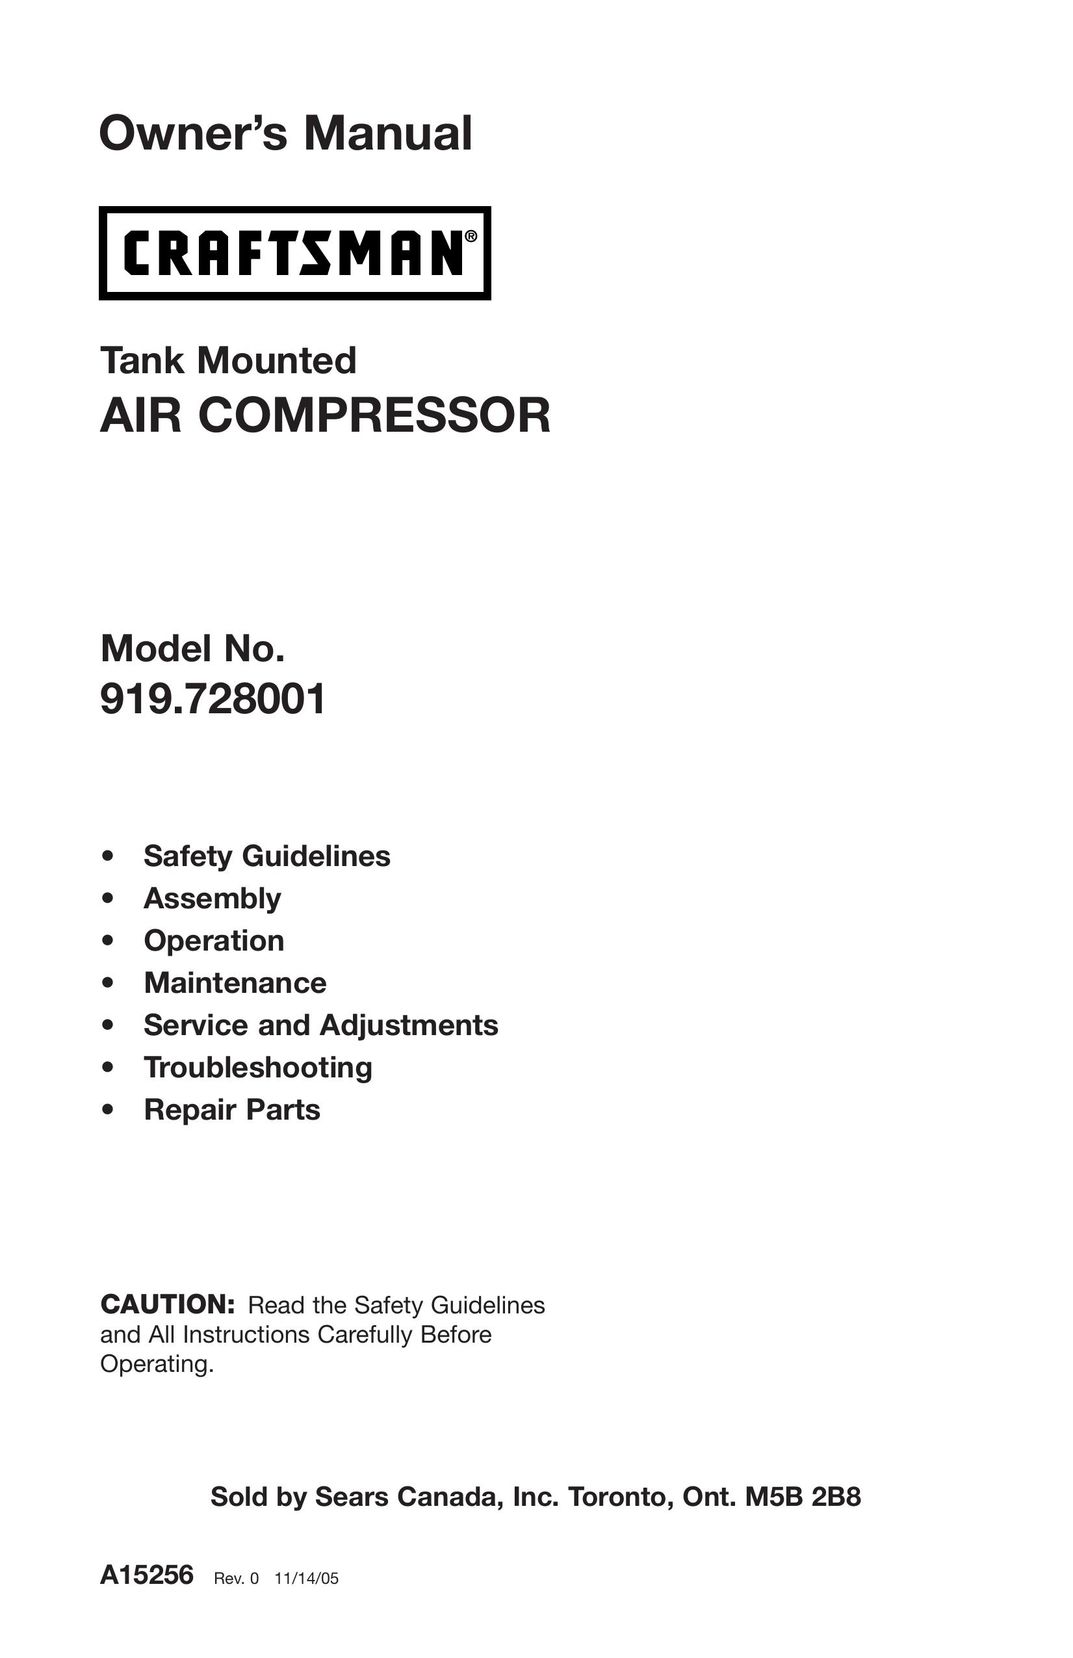 Craftsman 919.728001 Air Compressor User Manual